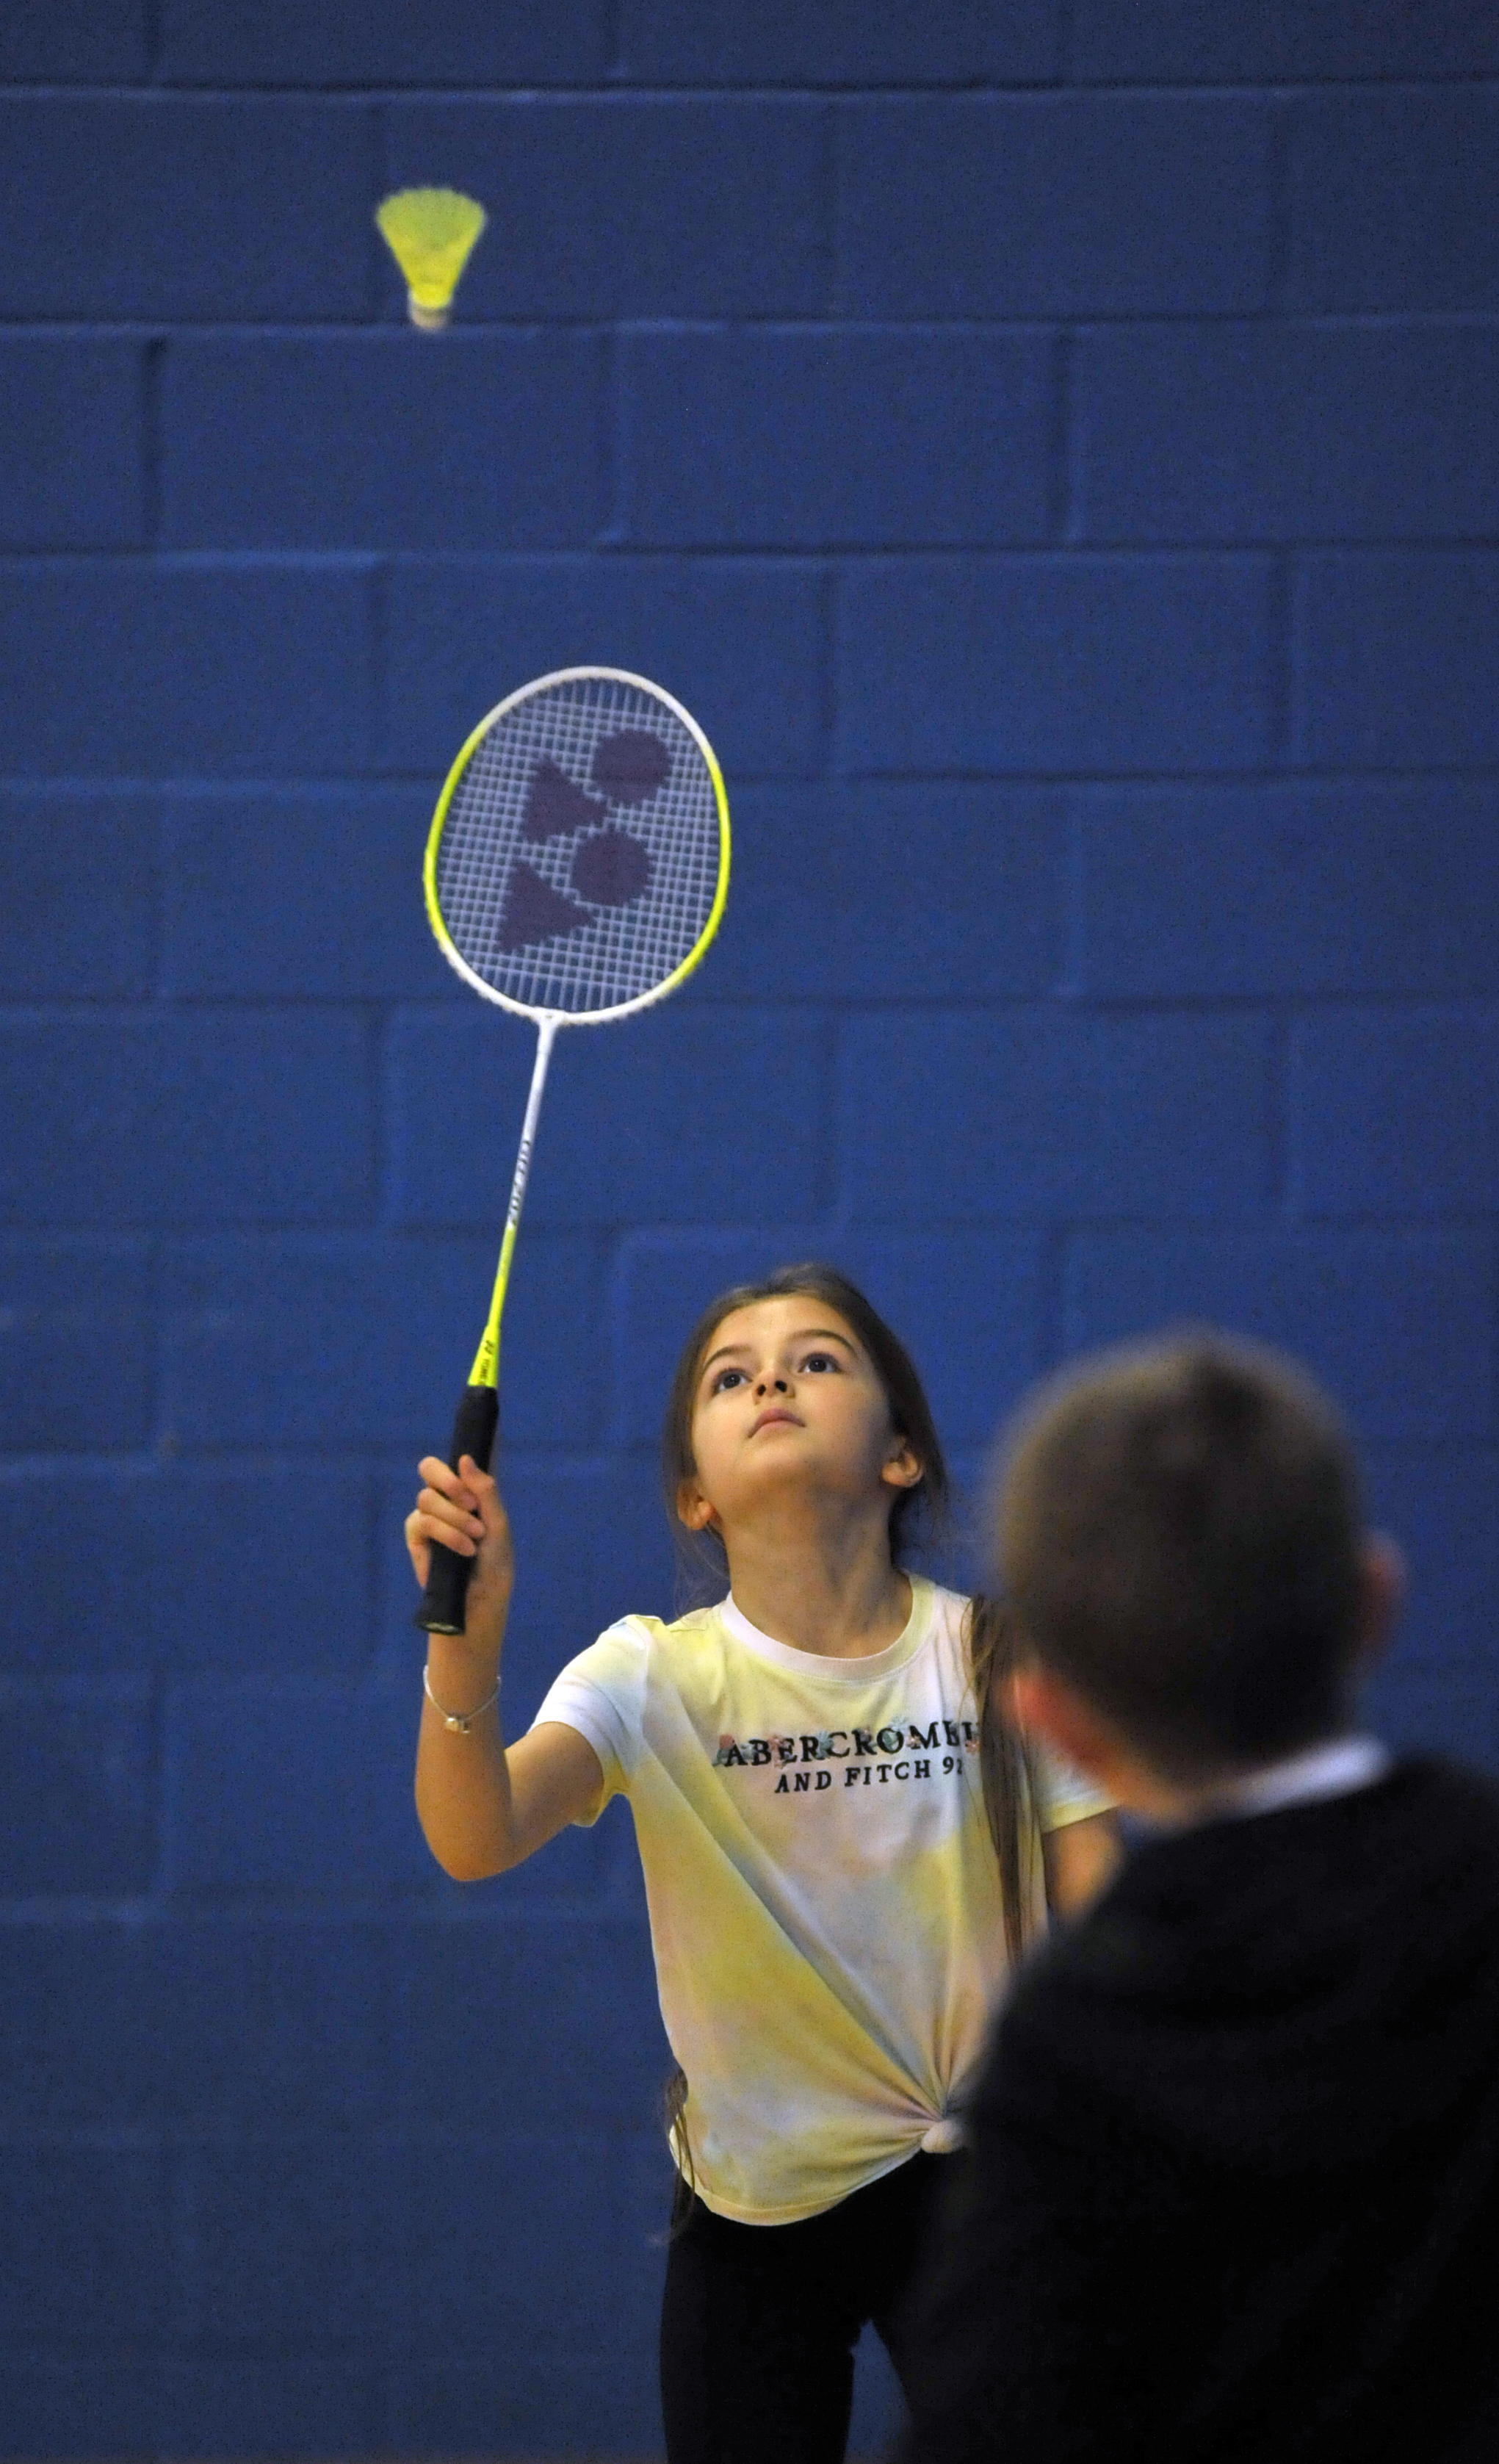 KA Badminton workshop at Greenwood academy